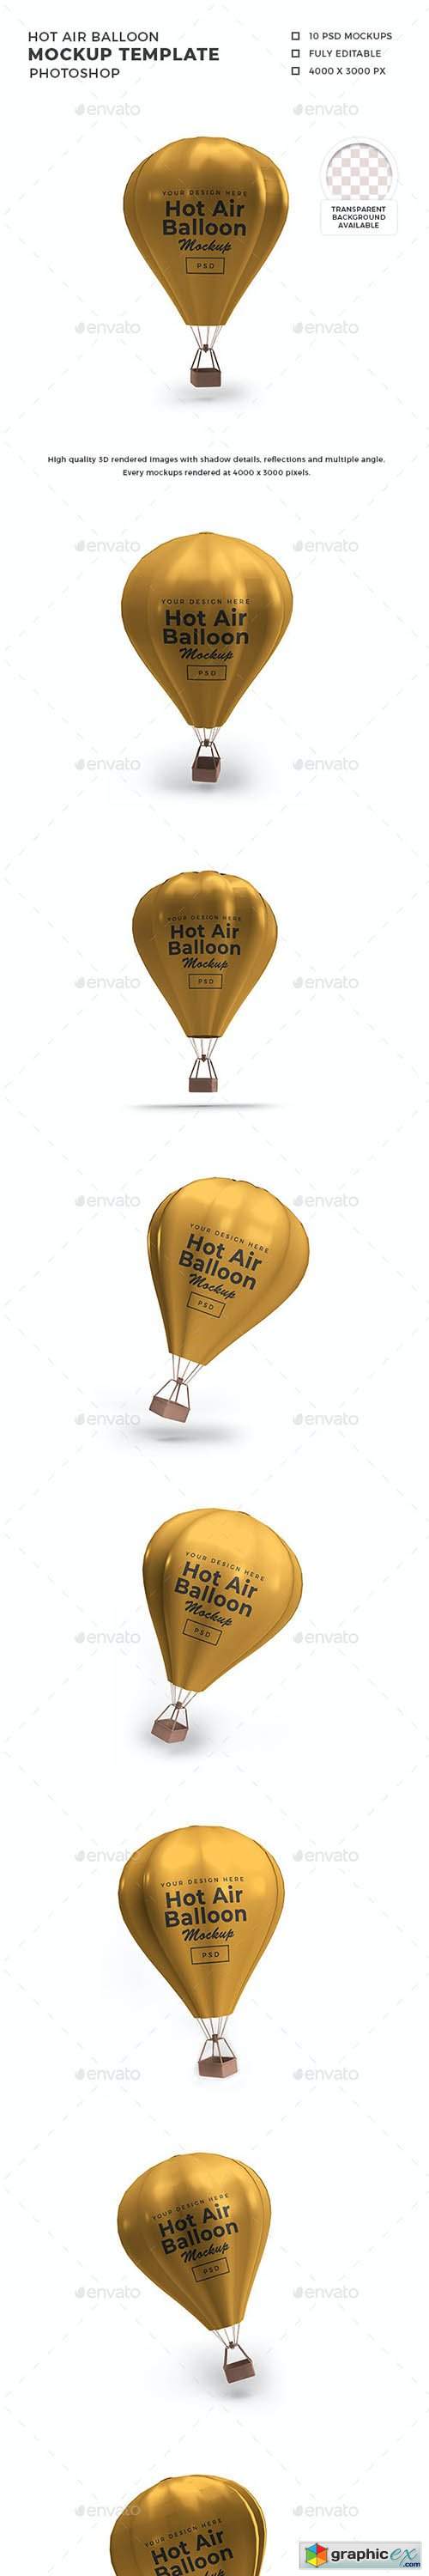 Hot Air Balloon 3D Mockup Template 